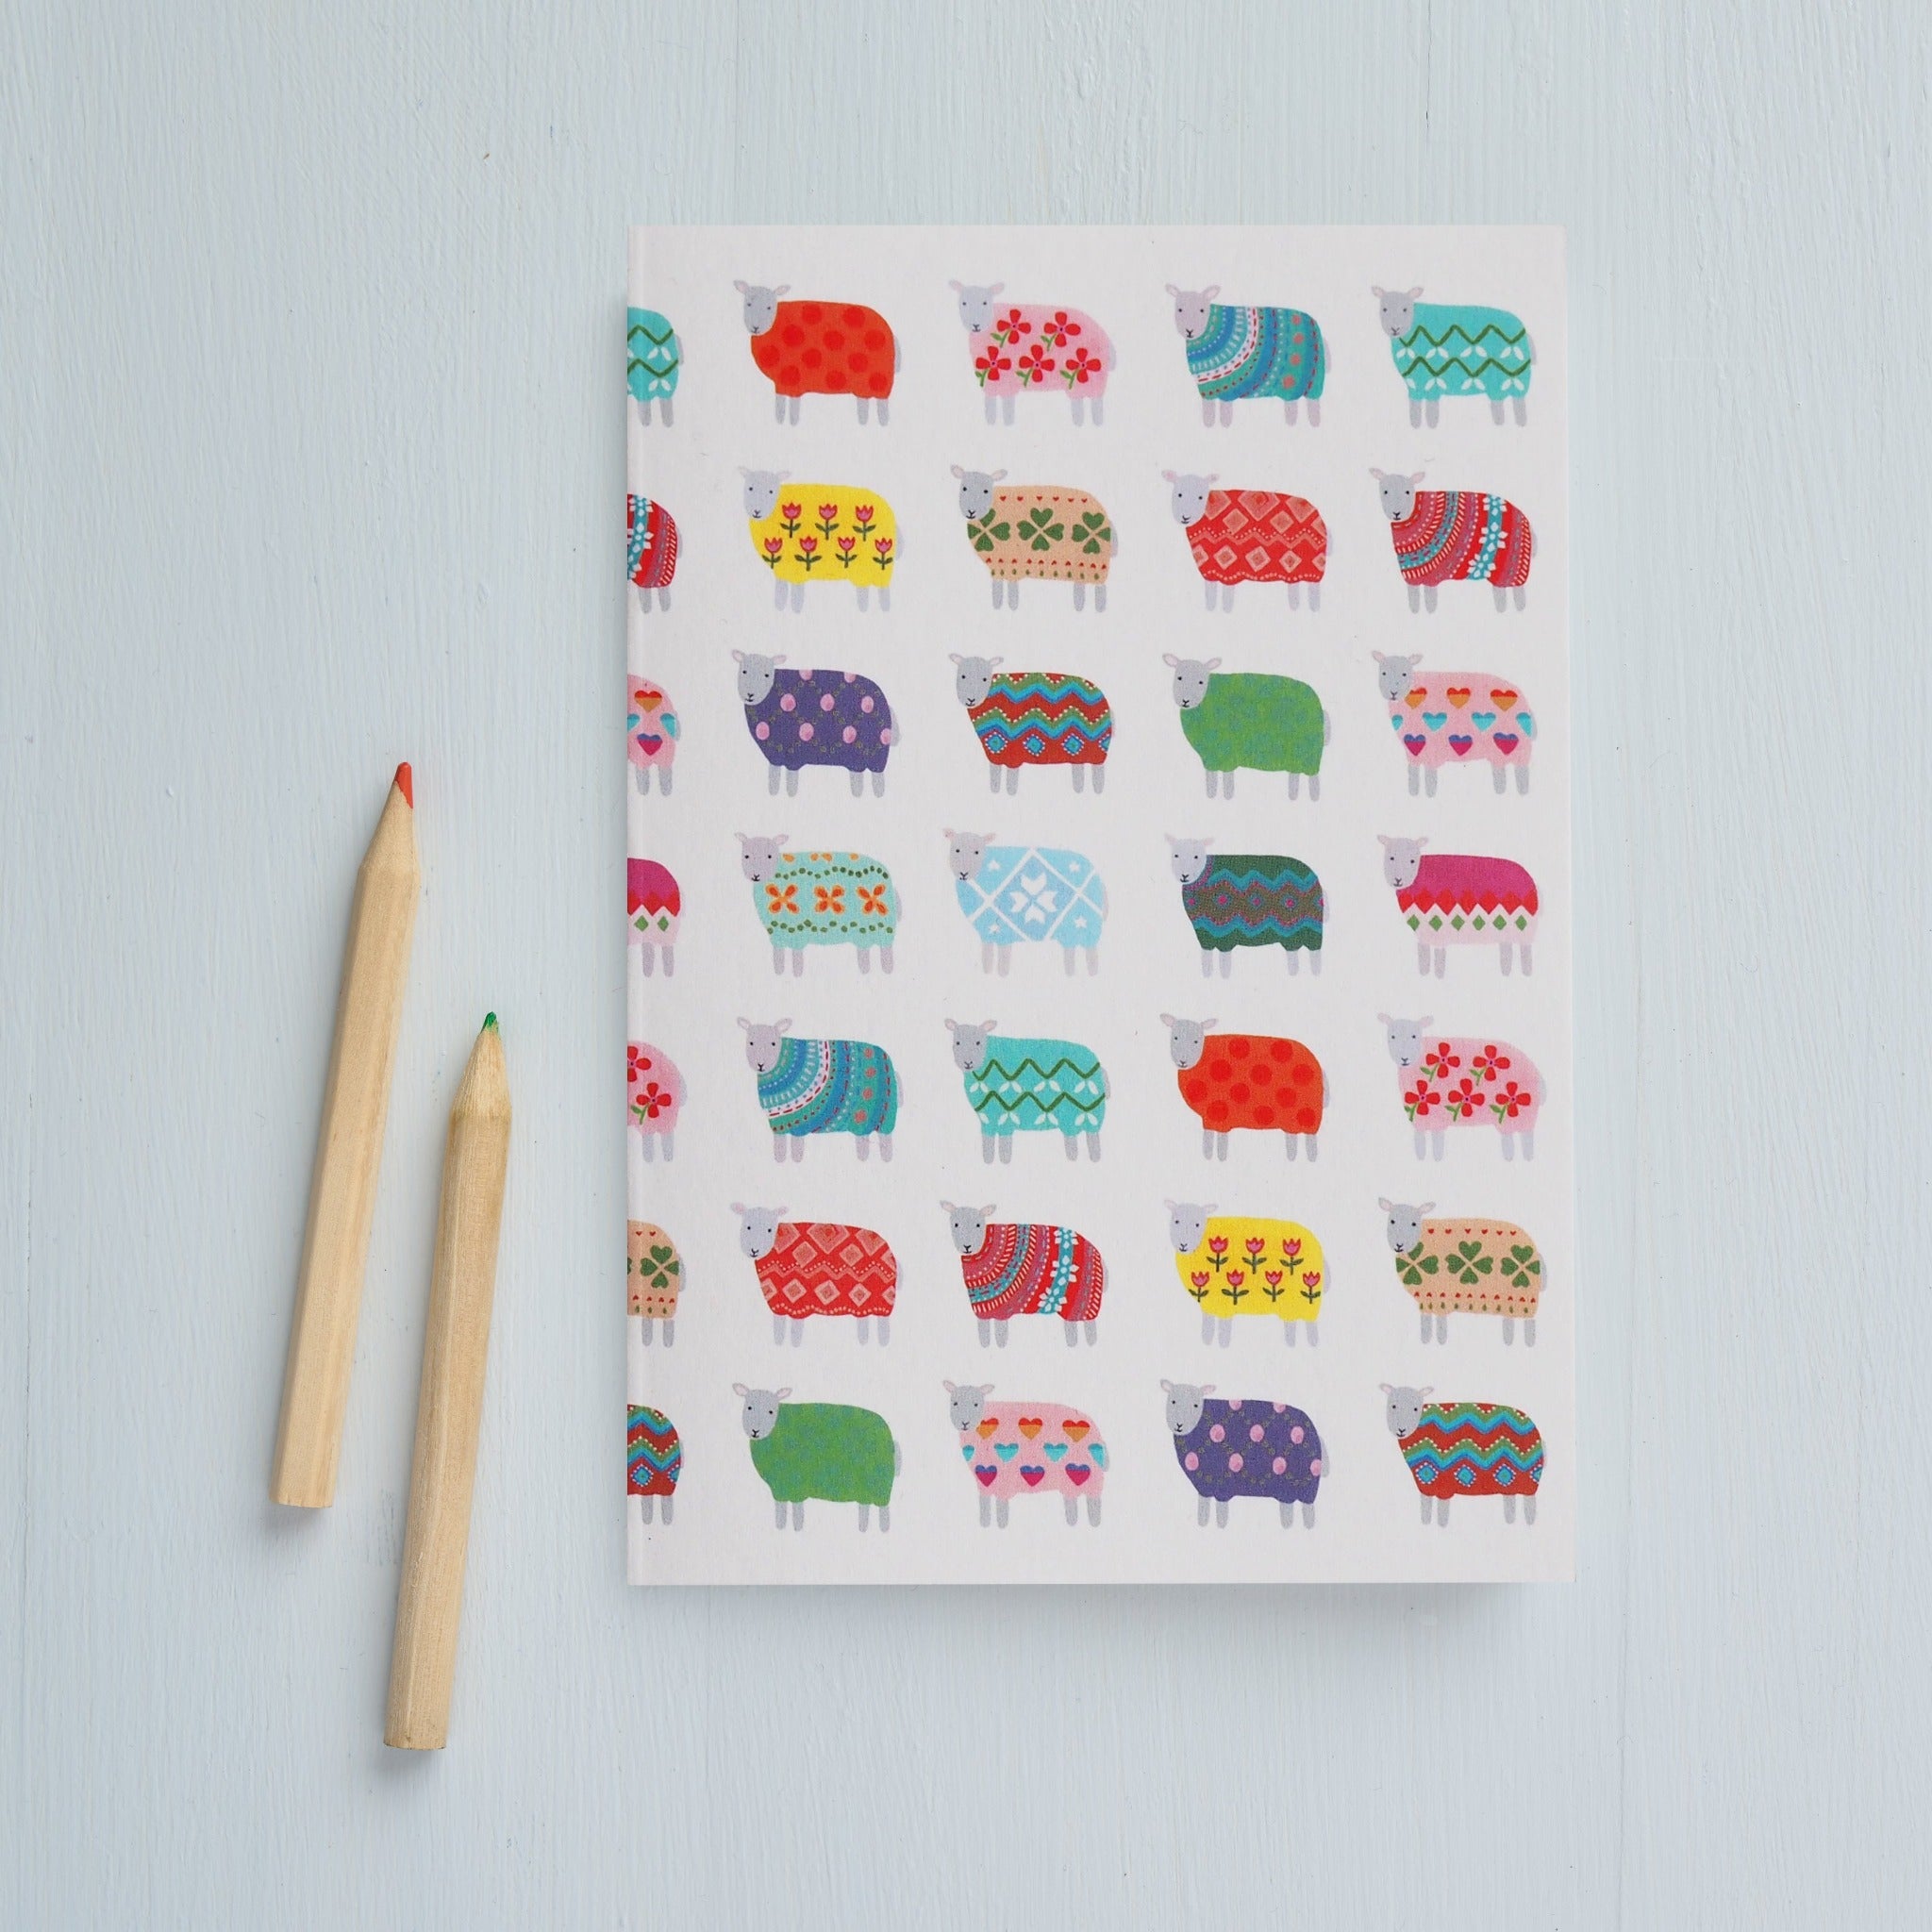 Small Sheep Pattern Notebook by Mary Kilvert